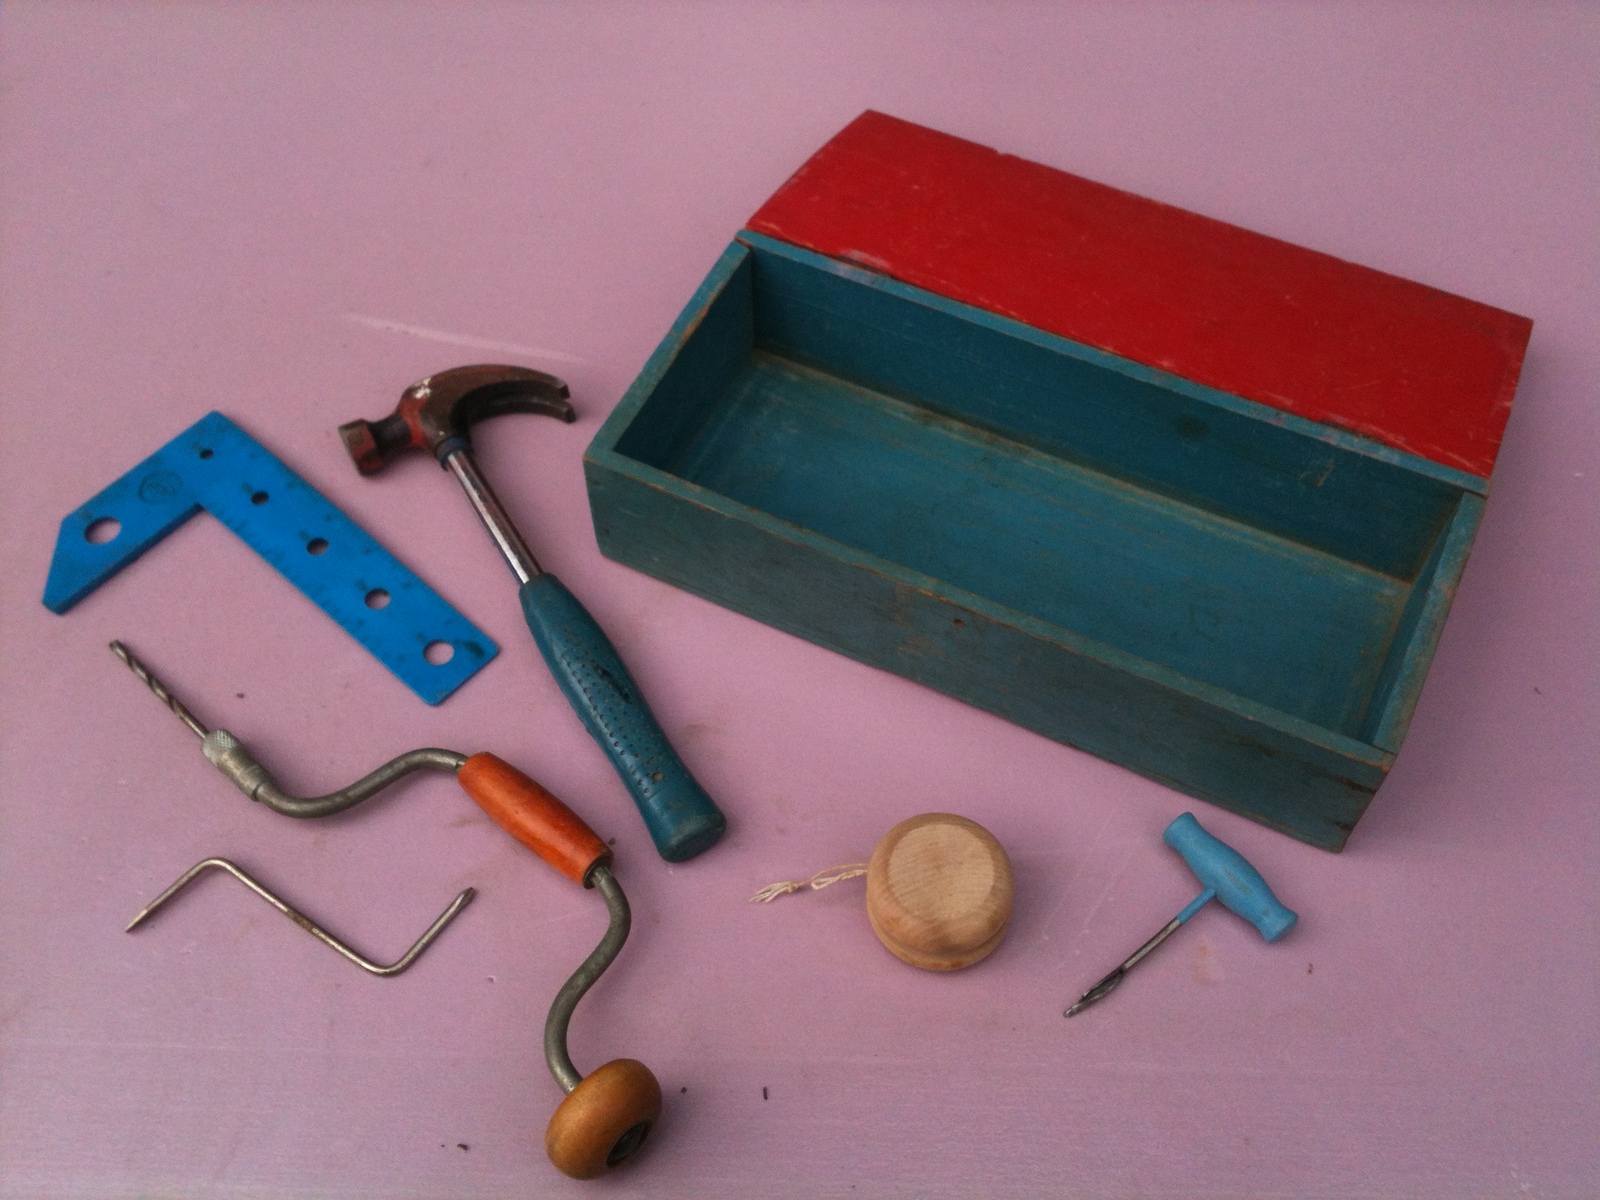 Green Tackle Box, Vintage Tacklebox, Toolbox, Rustic Tool Storage